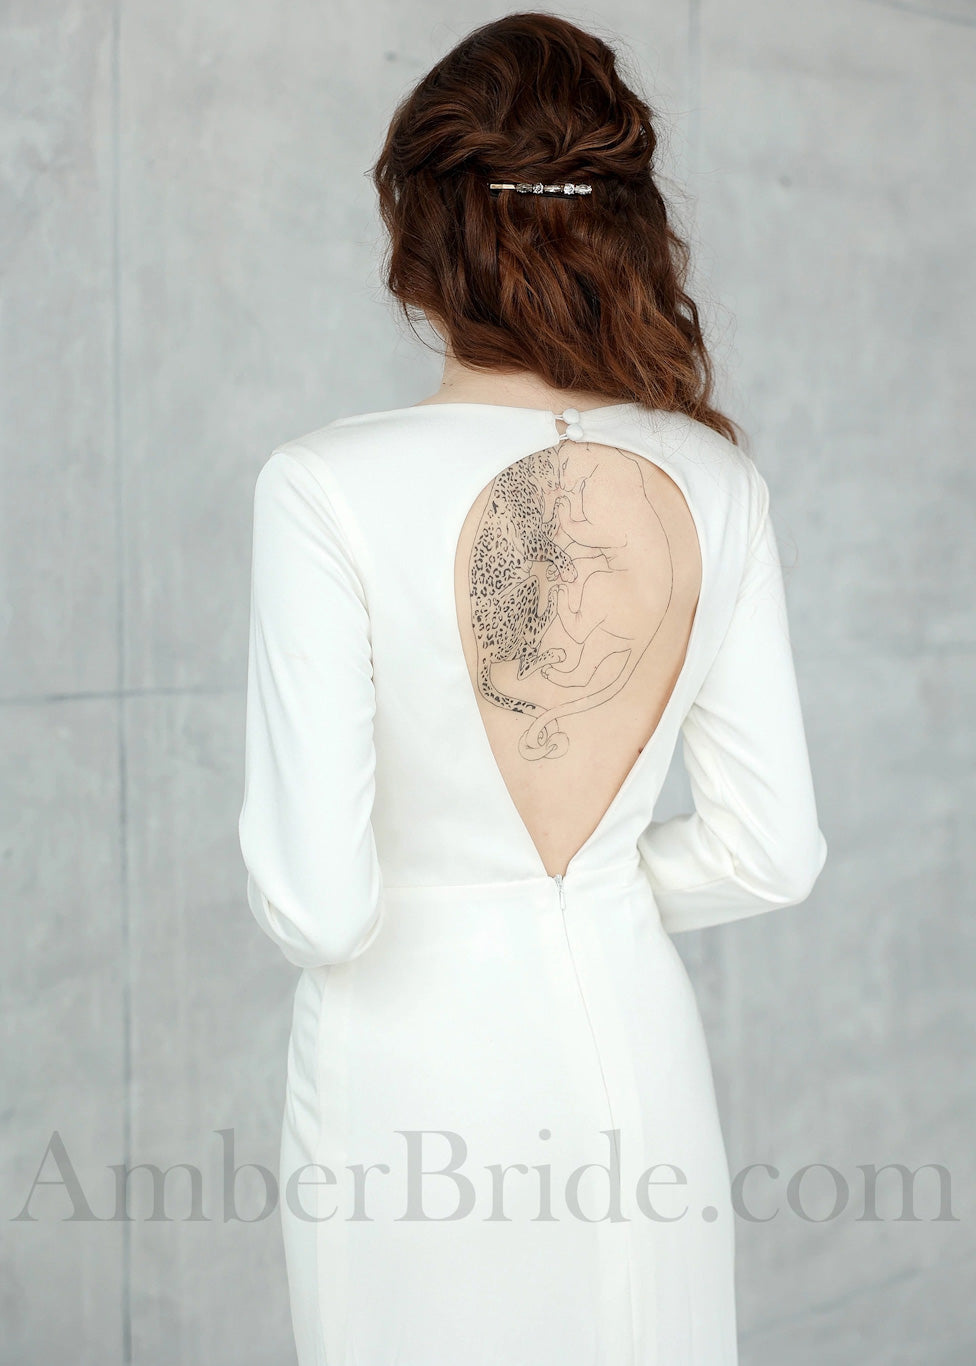 Minimalist Satin Sheath Wedding Dress with Long Sleeves Backless Design